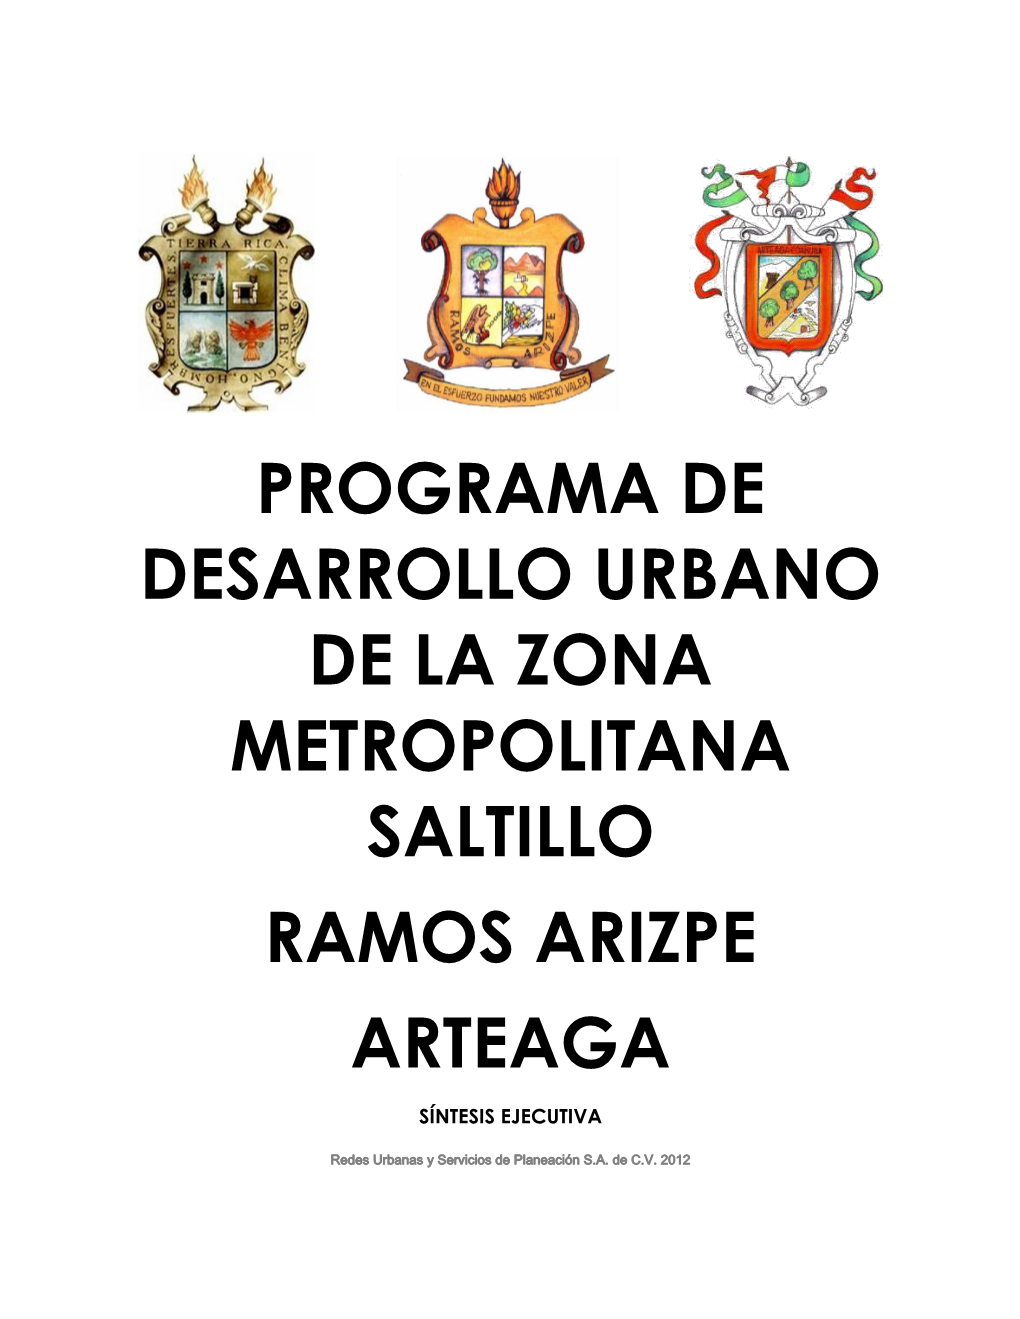 Programa De Desarrollo Urbano De La Zona Metropolitana Saltillo Ramos Arizpe Arteaga